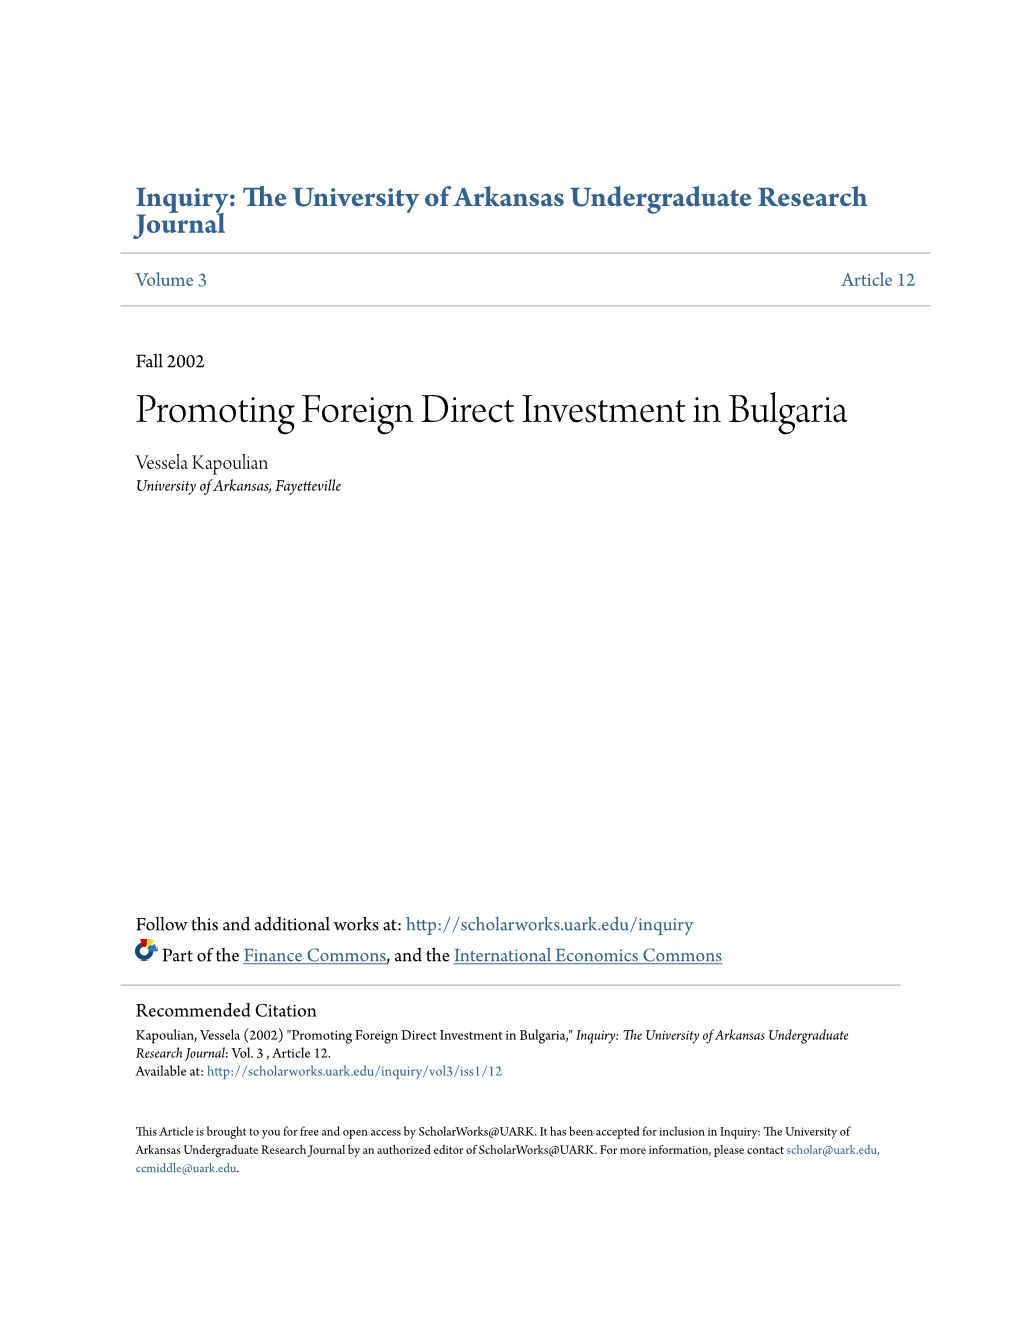 Promoting Foreign Direct Investment in Bulgaria Vessela Kapoulian University of Arkansas, Fayetteville